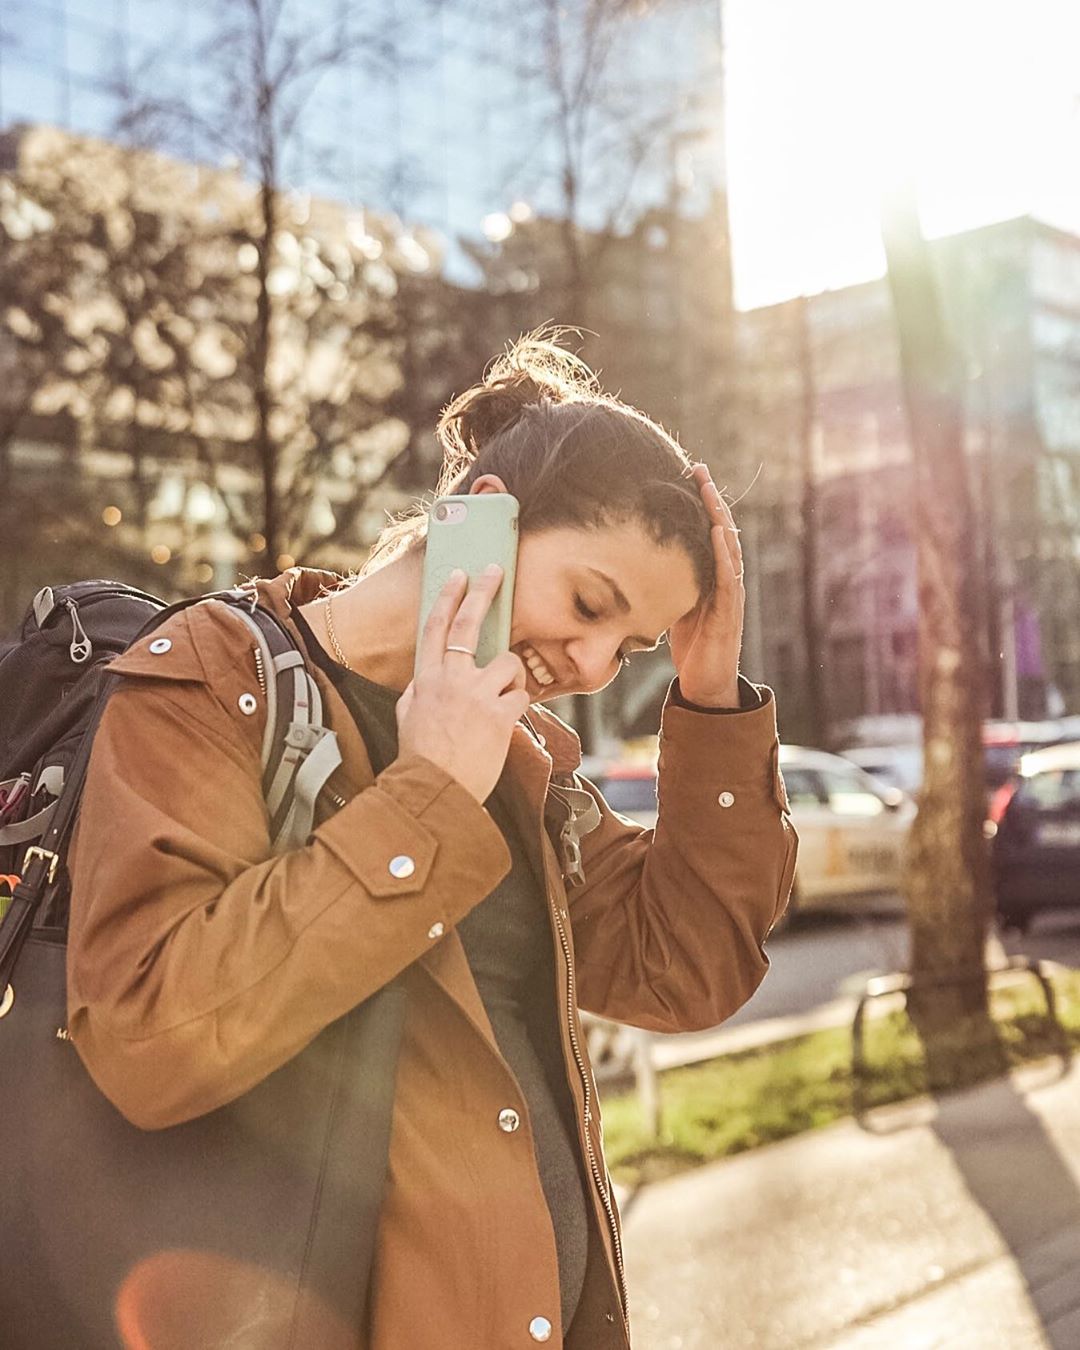 Woman talking on phone in brown jacket. Photo by Instagram user @m_grueneberg